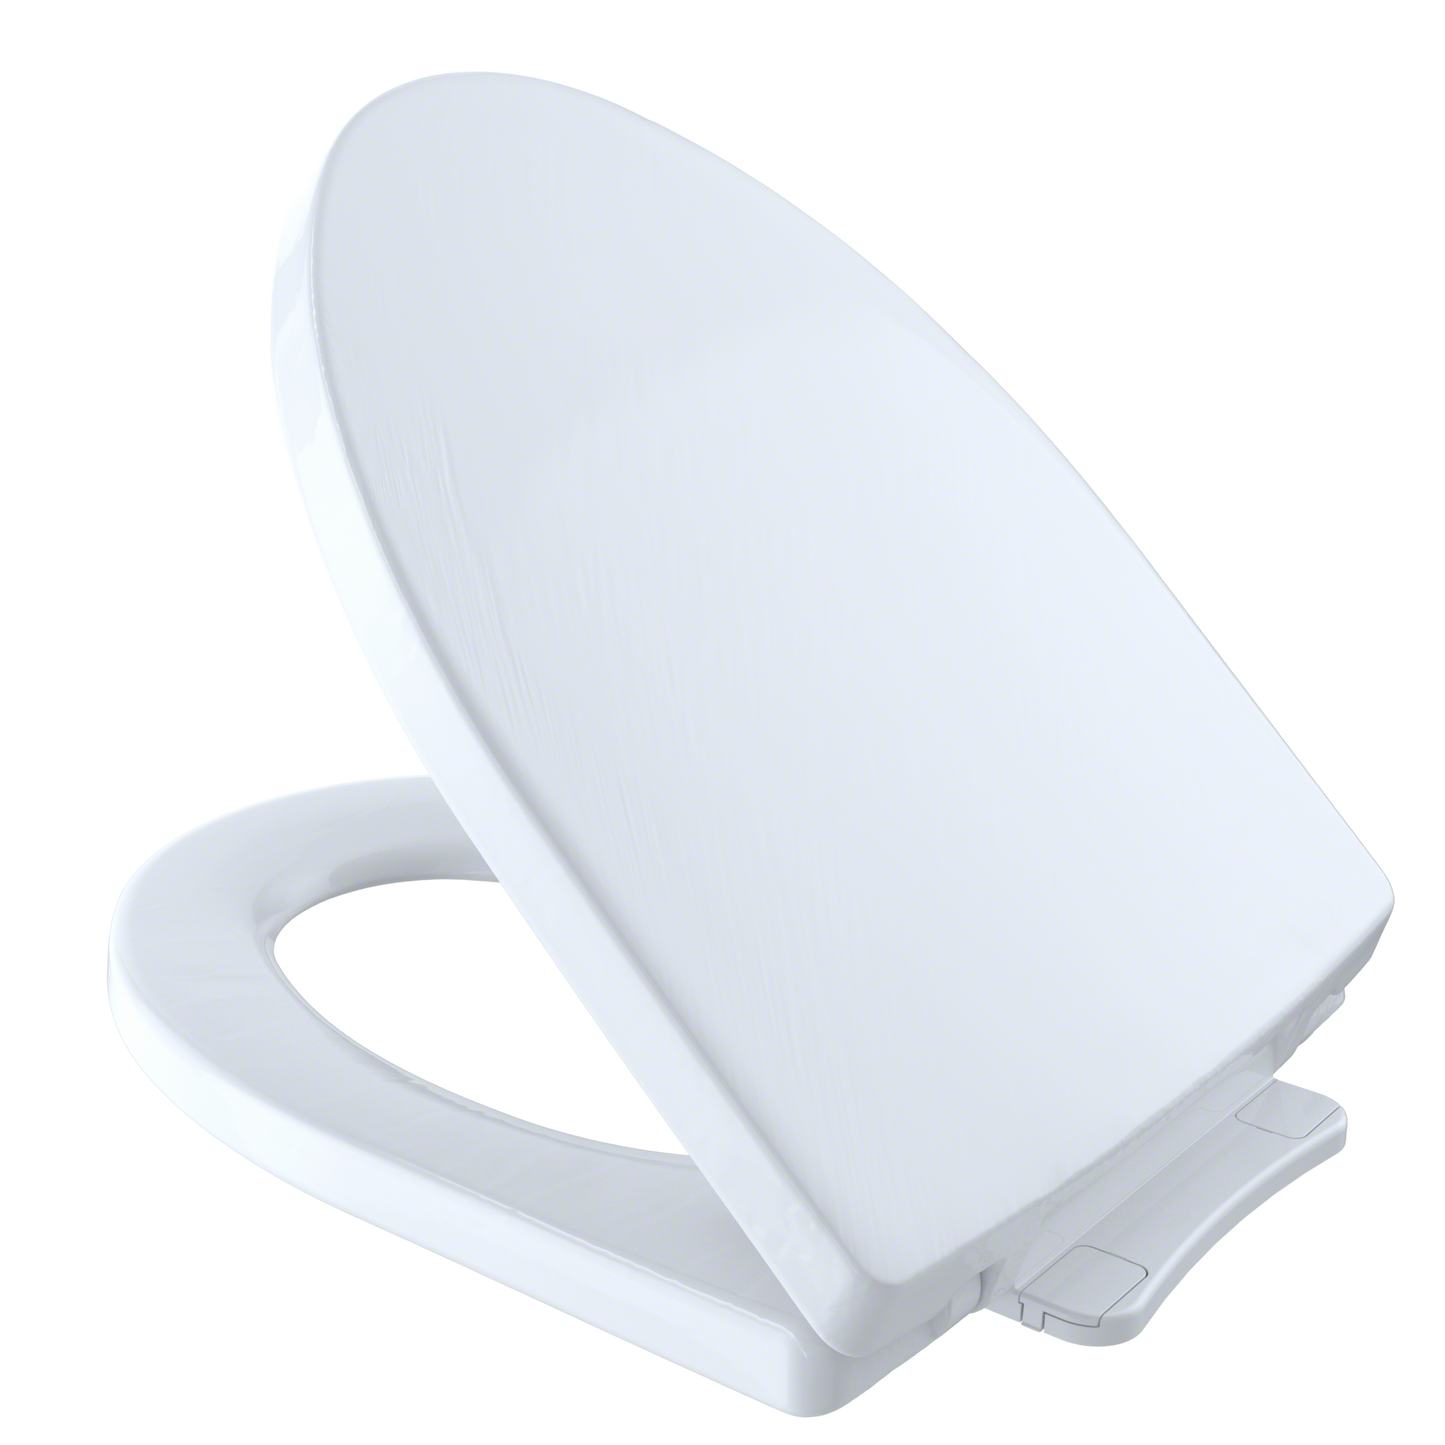 SS214#01 - Soiree SoftClose Elongated Toilet Seat- Cotton White